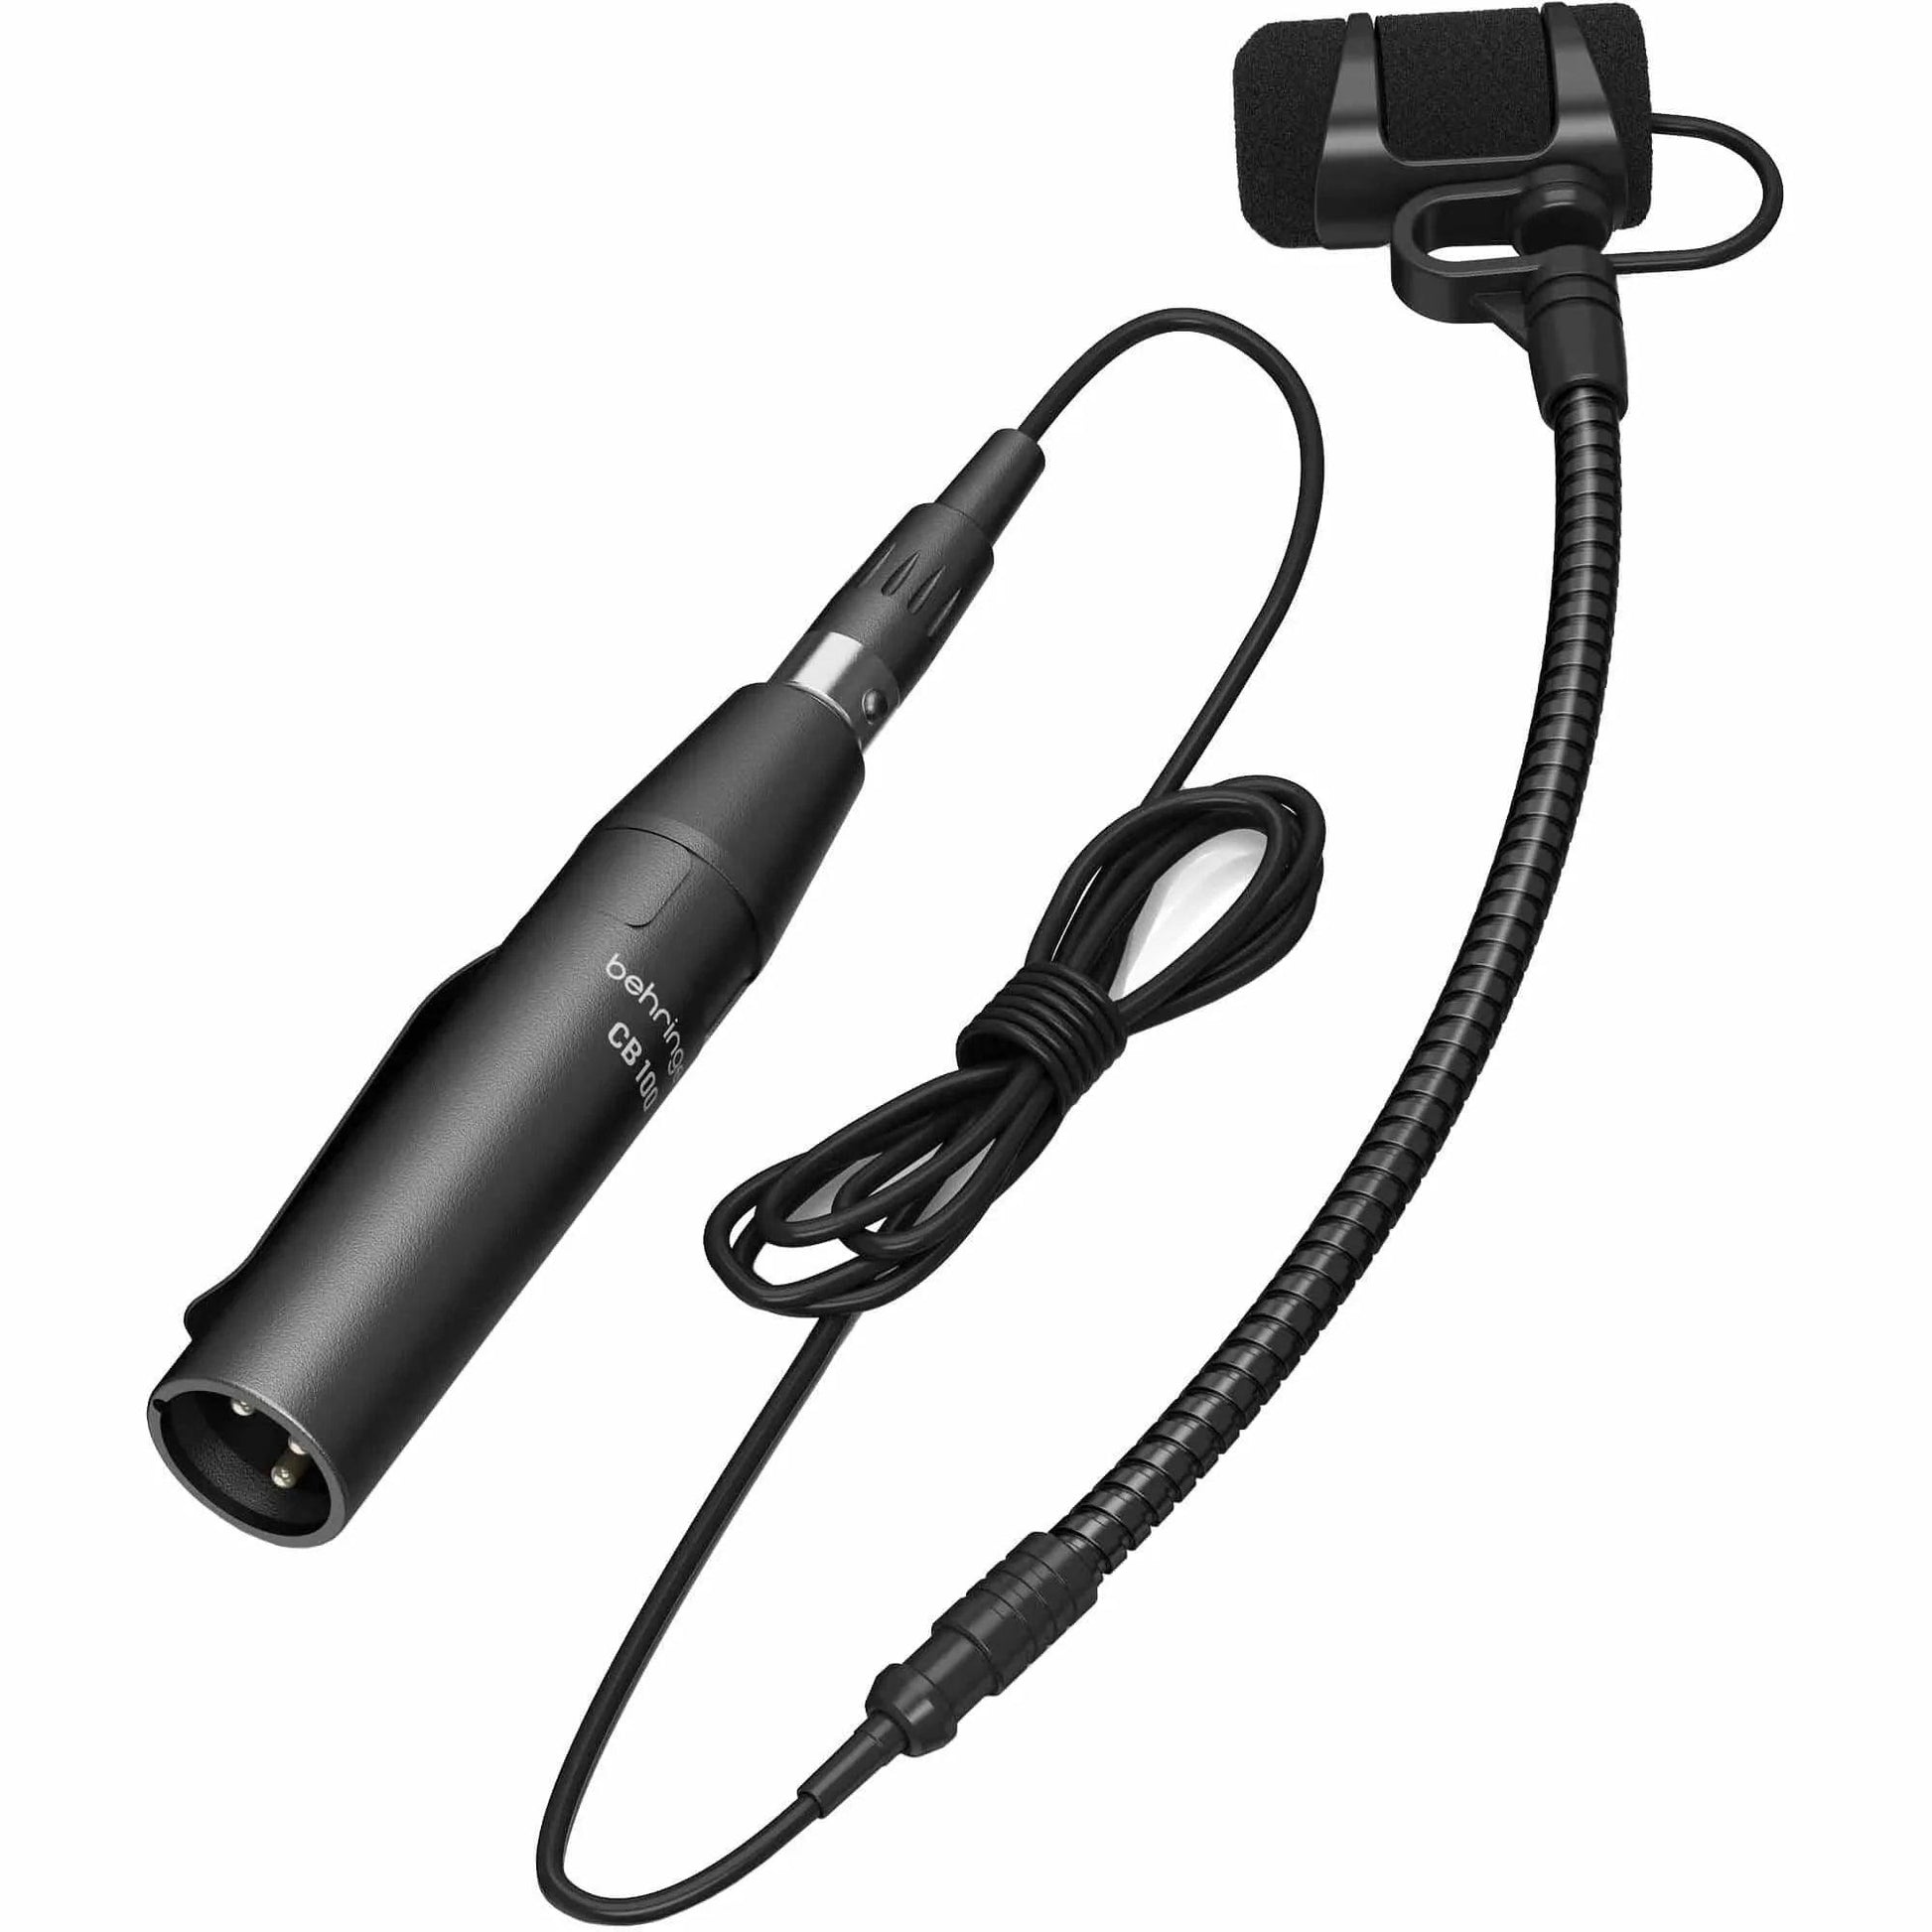 Behringer CB 100 Condenser Gooseneck Microphone for Instrument Applications